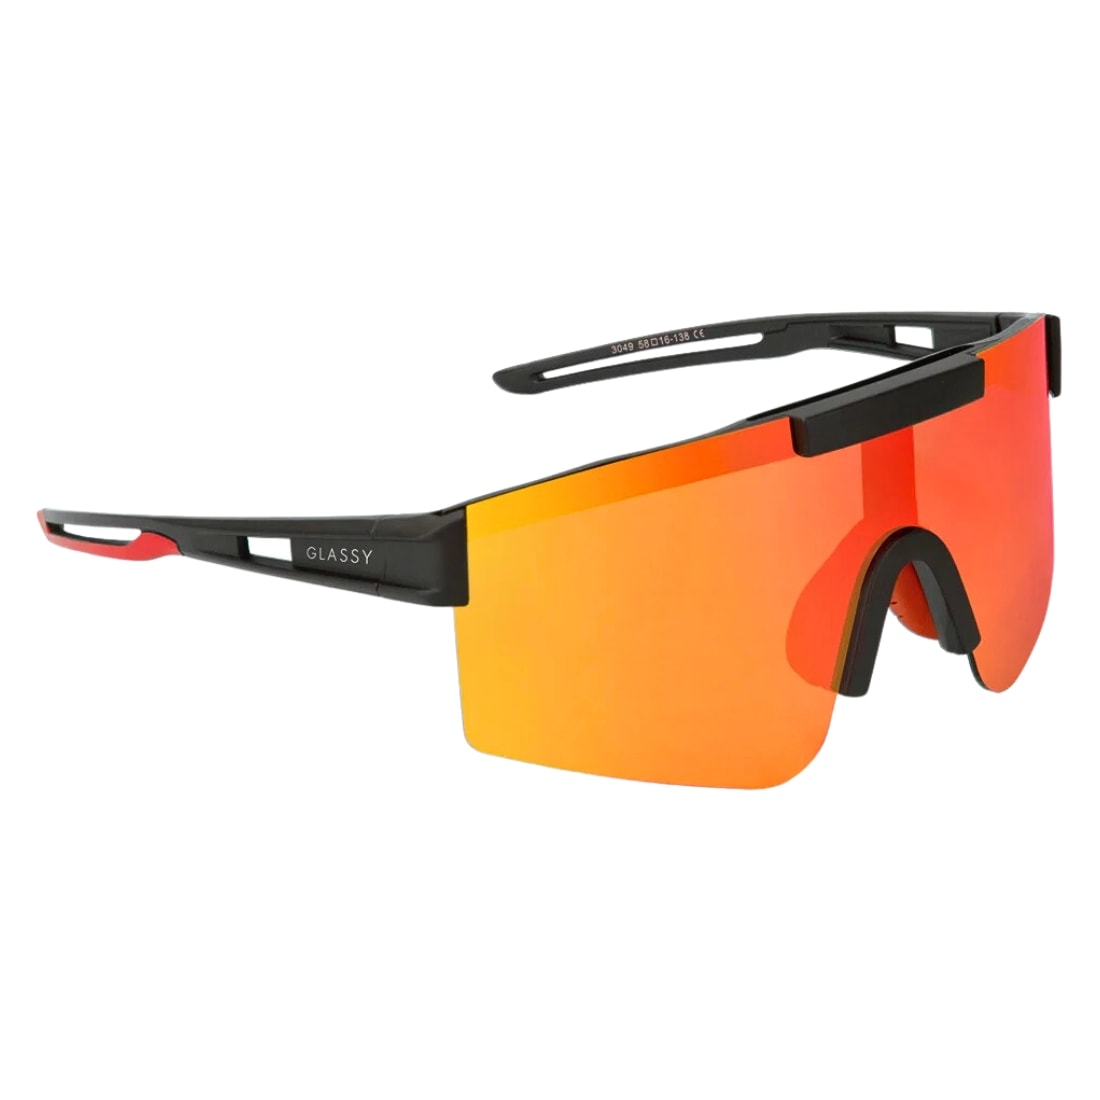 Glassy Salt Polarised Speed Shade Sunglasses - Black/Red Mirror - Wrap Around Sunglasses by Glassy